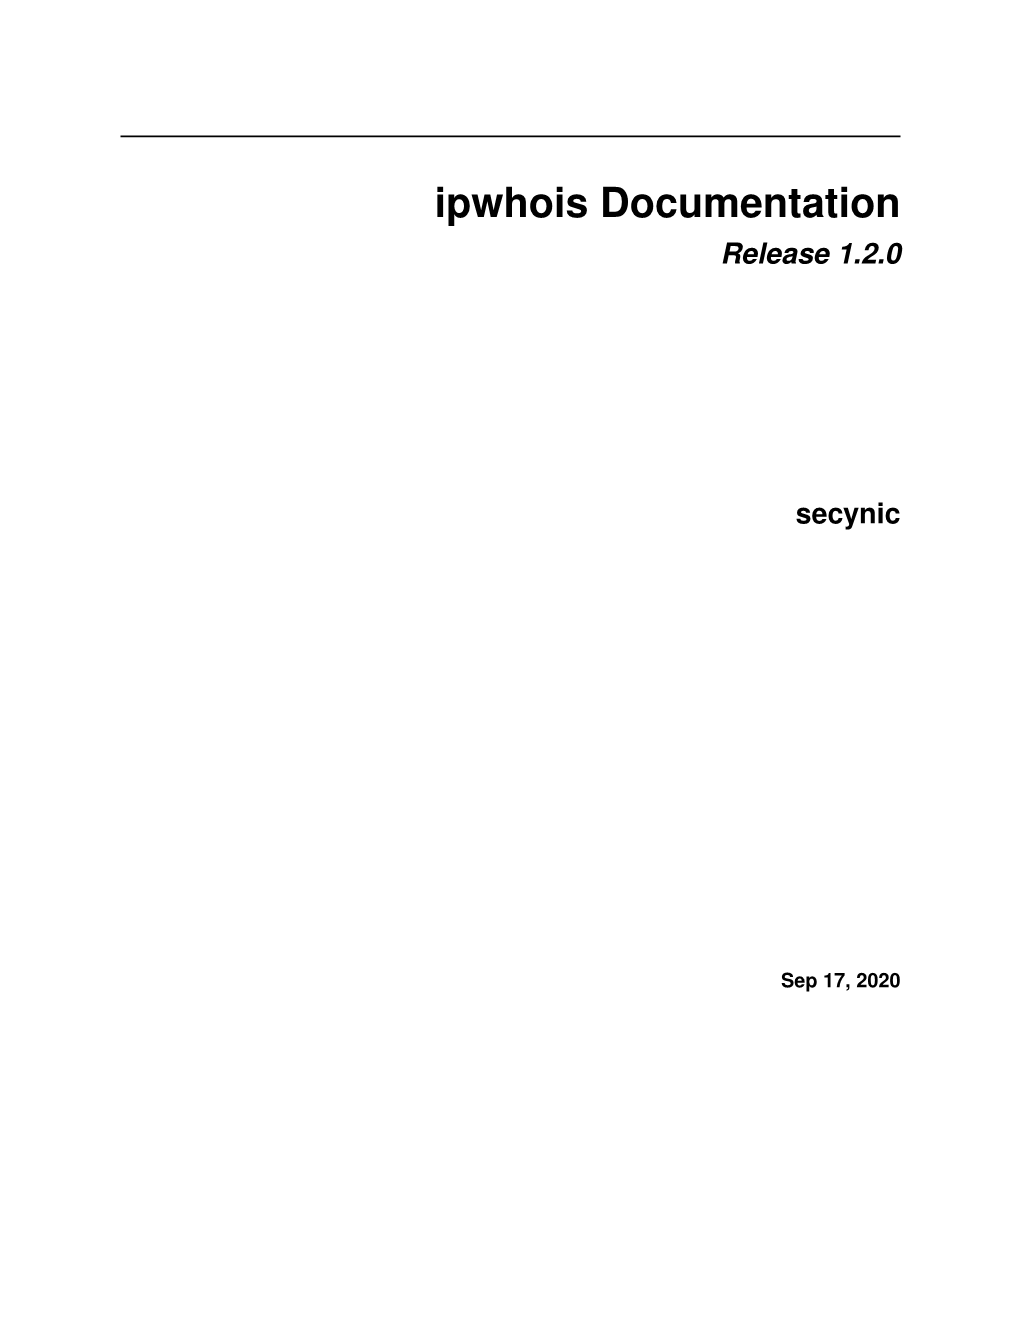 Ipwhois Documentation Release 1.2.0